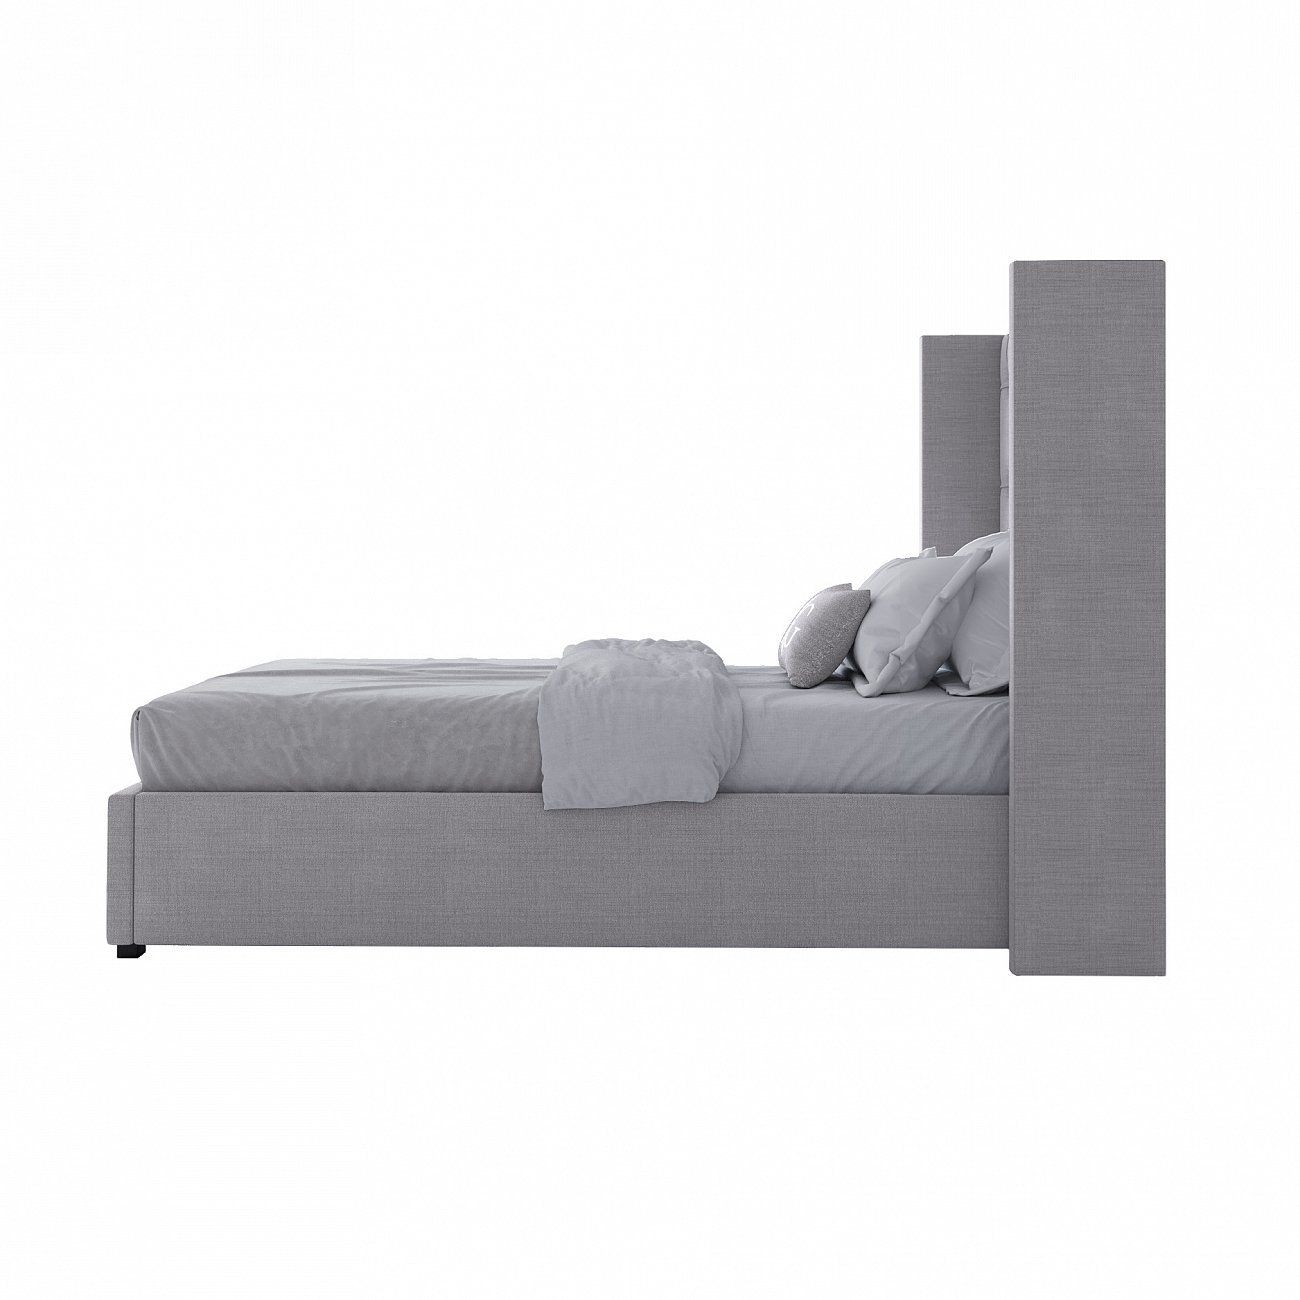 Single bed 90x200 cm Wing-2 light gray linen P